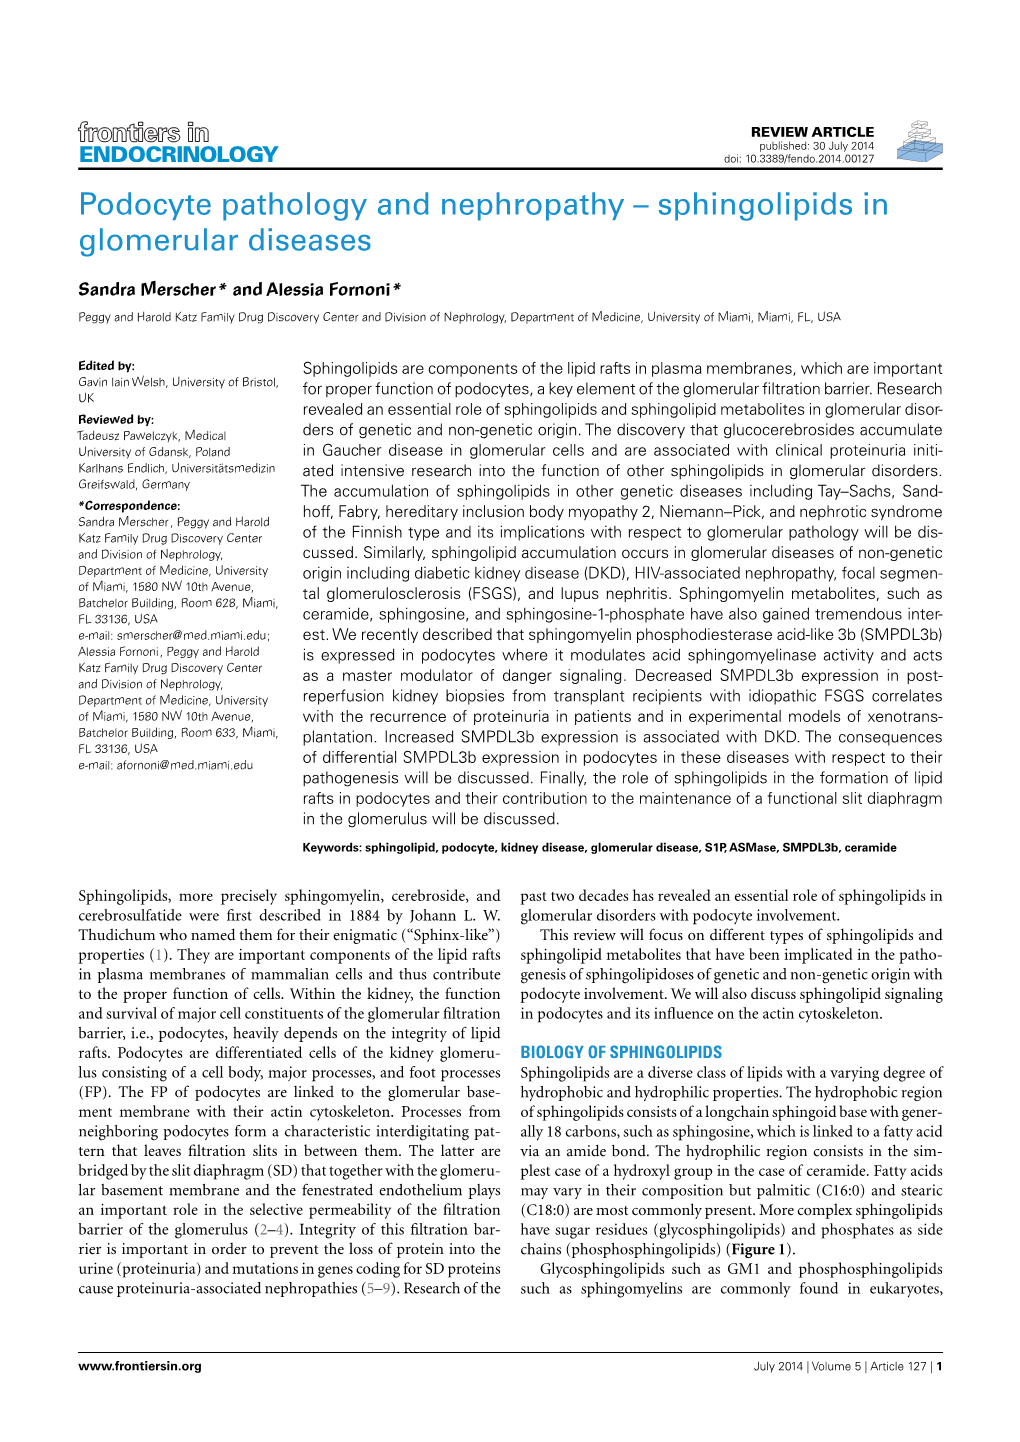 Sphingolipids in Glomerular Diseases